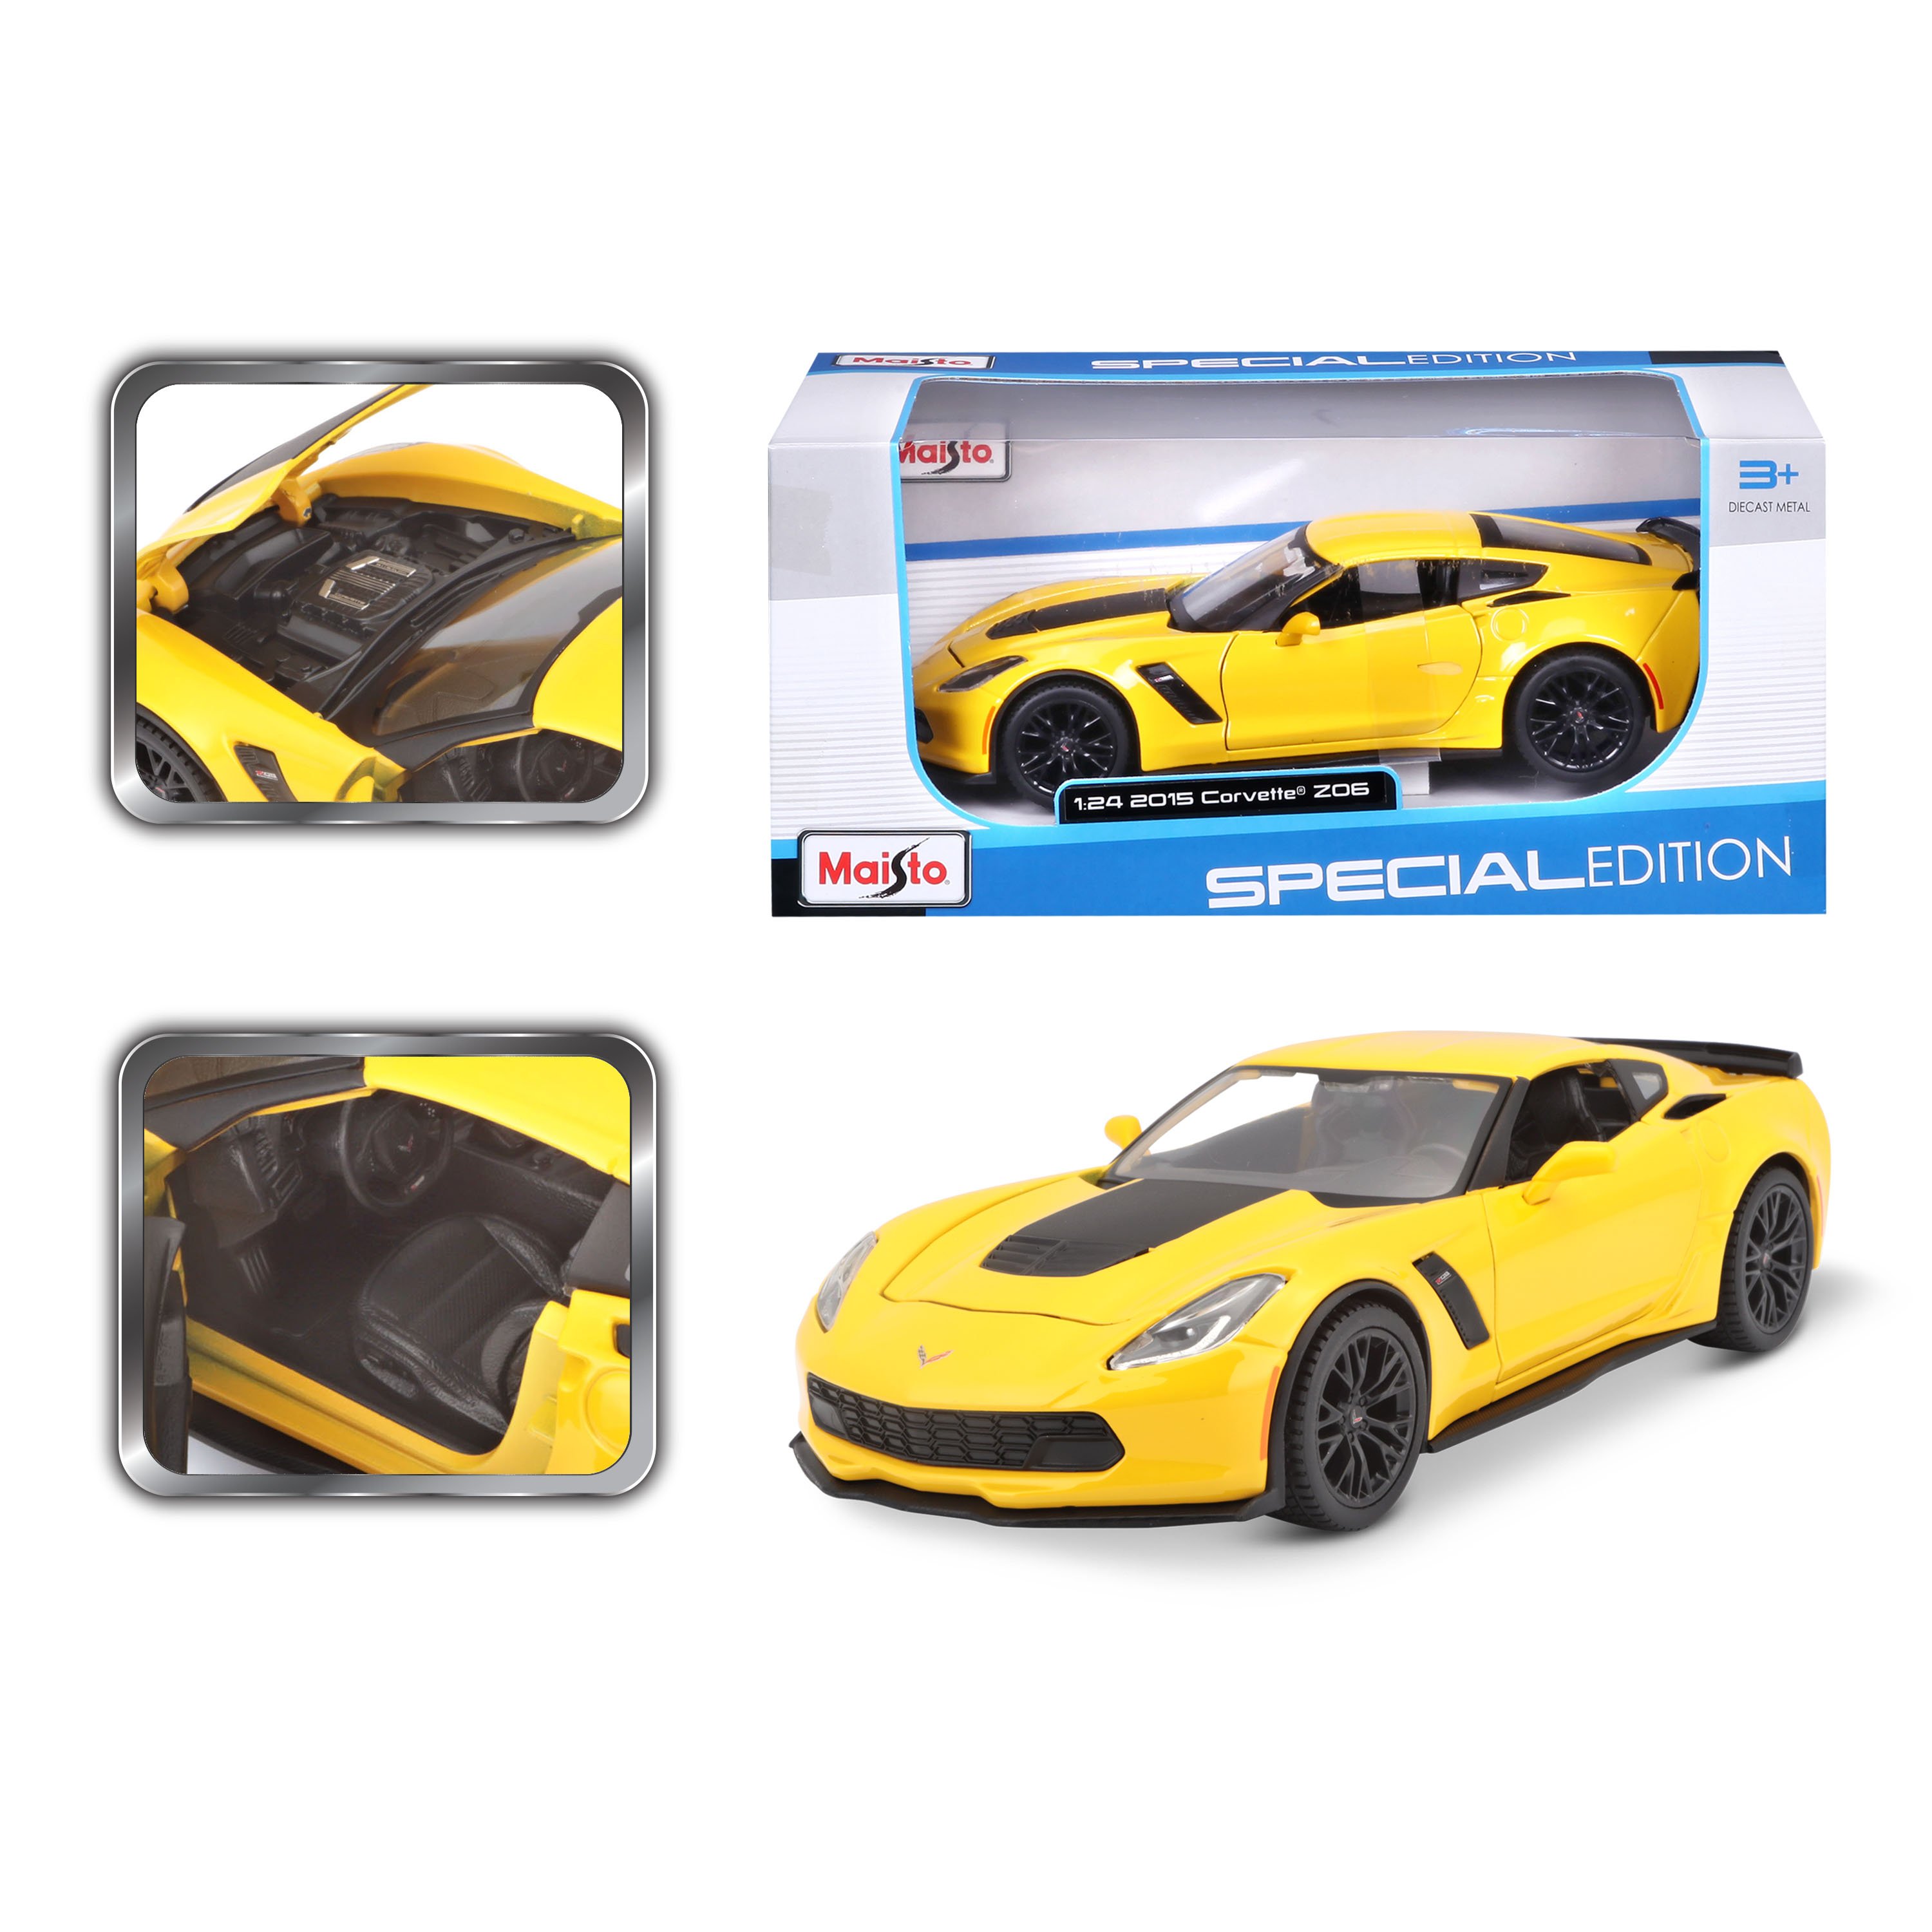 Ігрова автомодель Maisto 2015 Chevrolet Corvette Z06 жовтий, 1:24 (31133 yellow) - фото 7